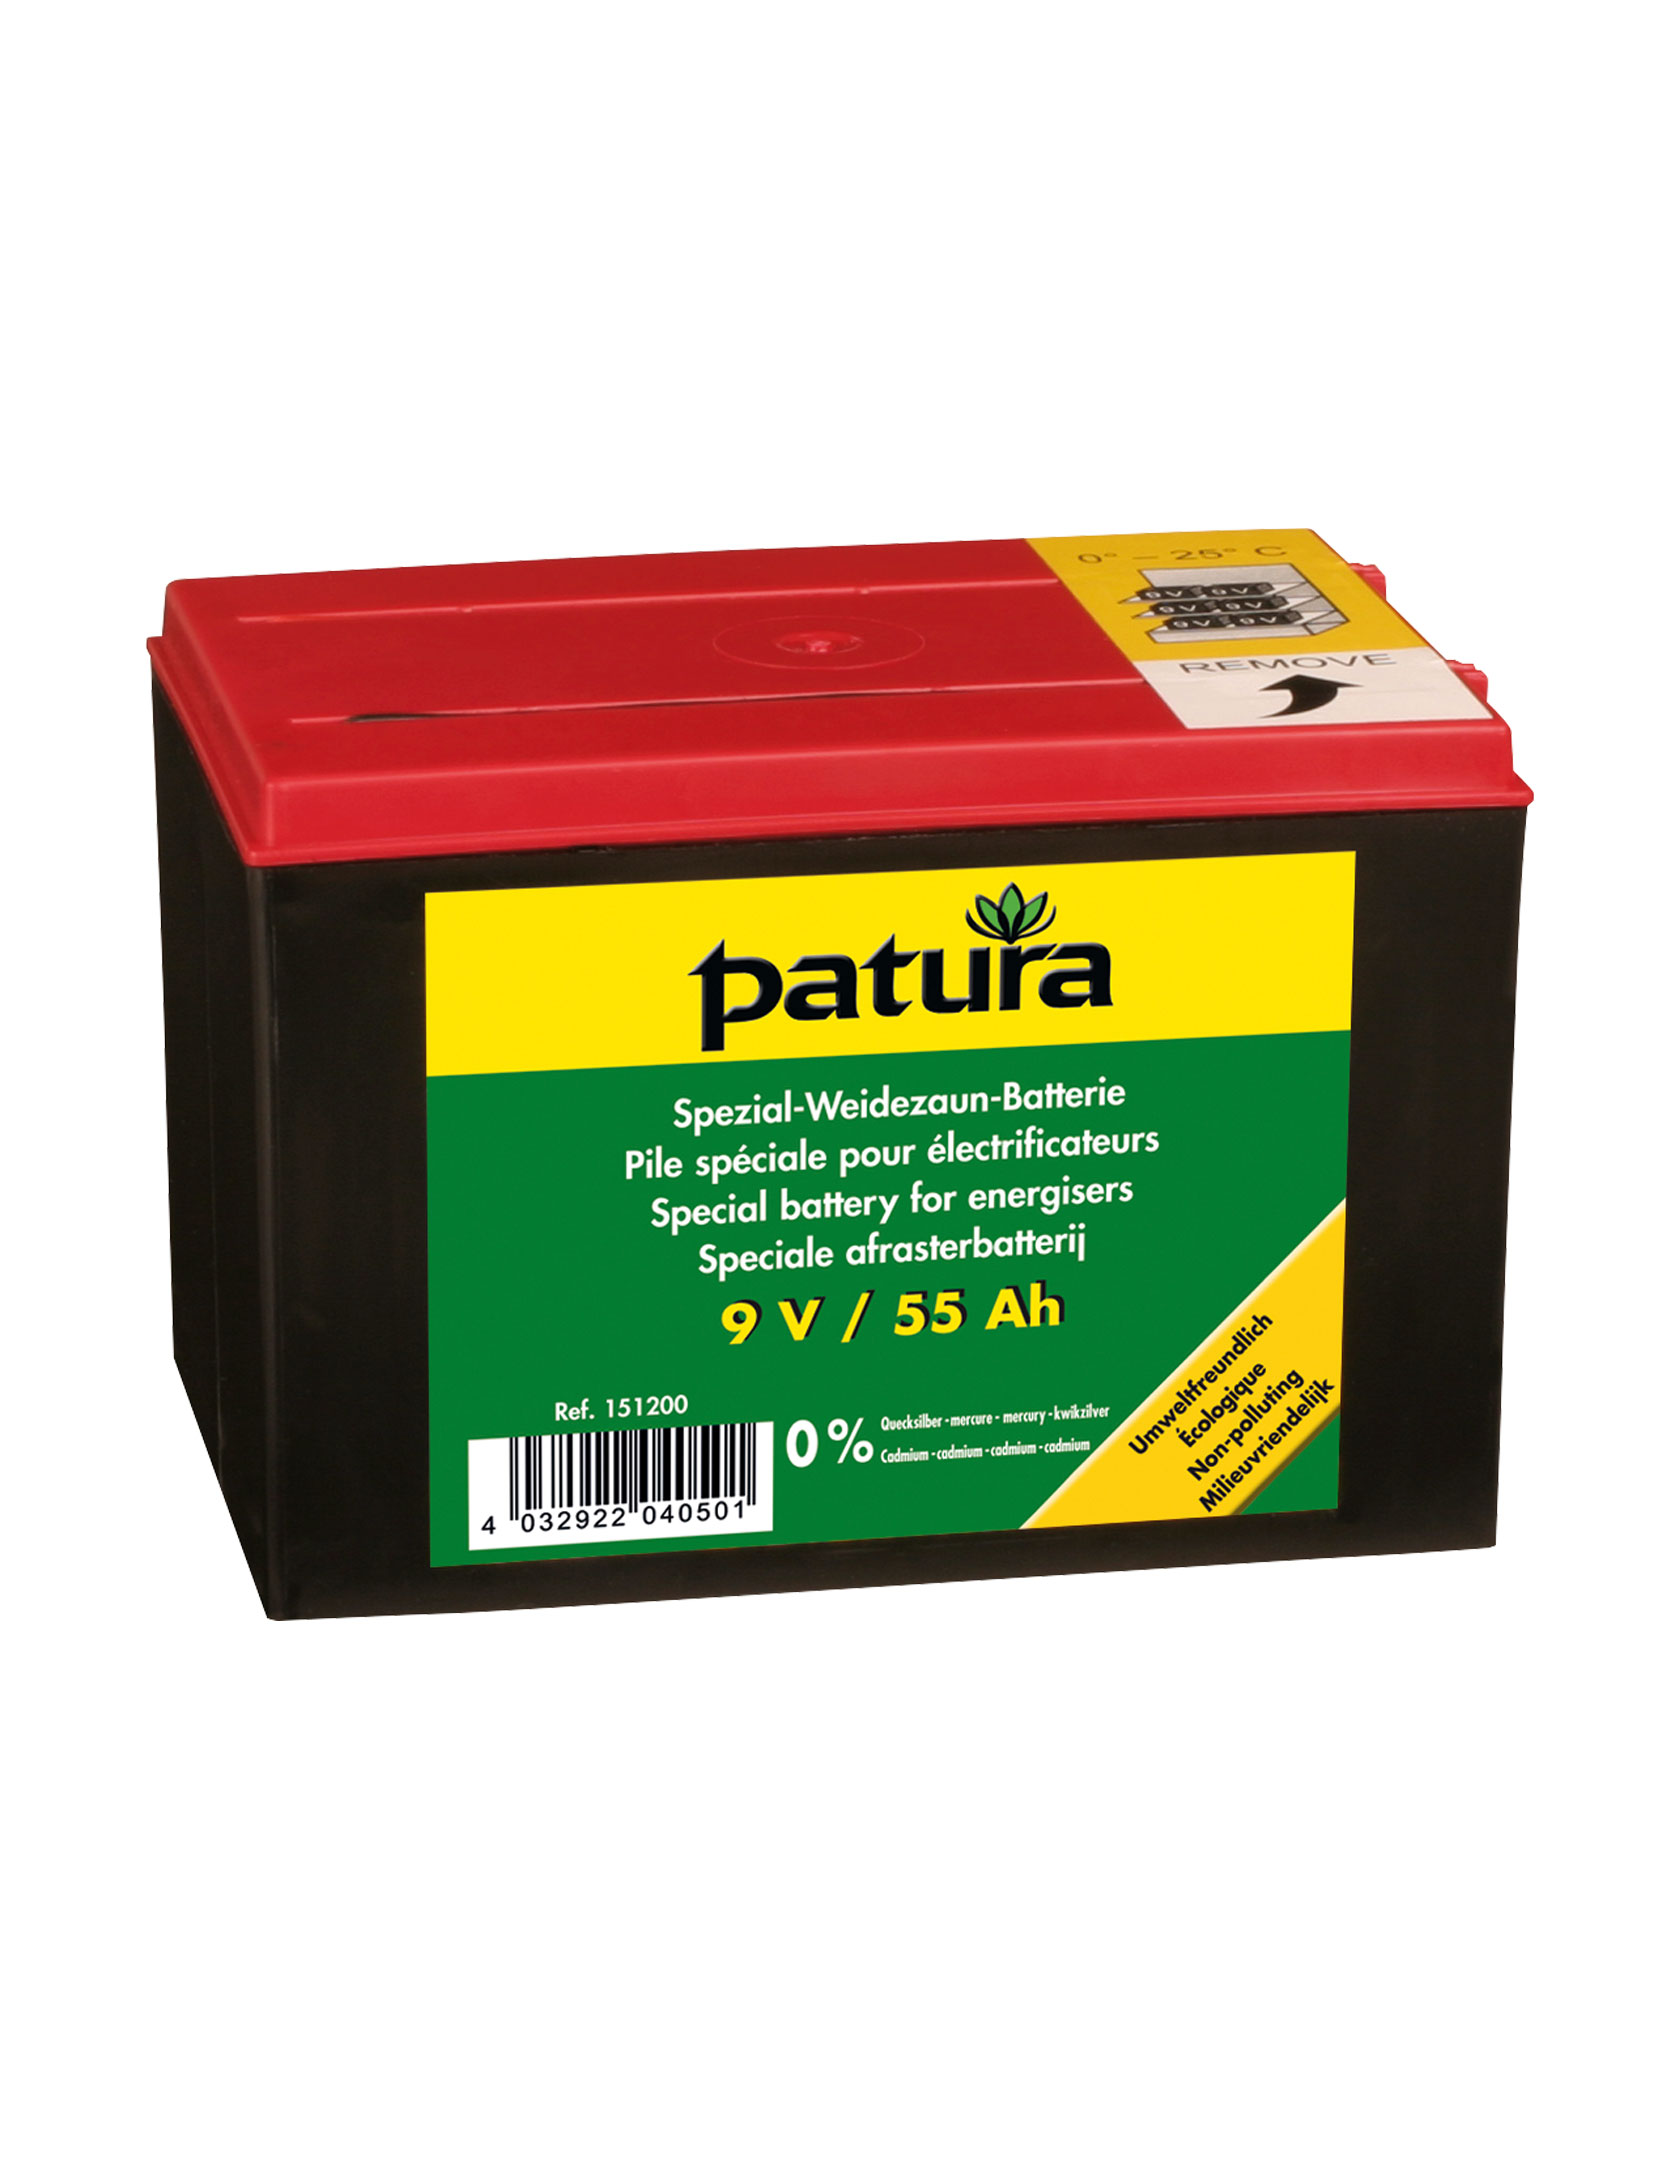 PATURA Spezial-Weidezaun-Batterie 9V